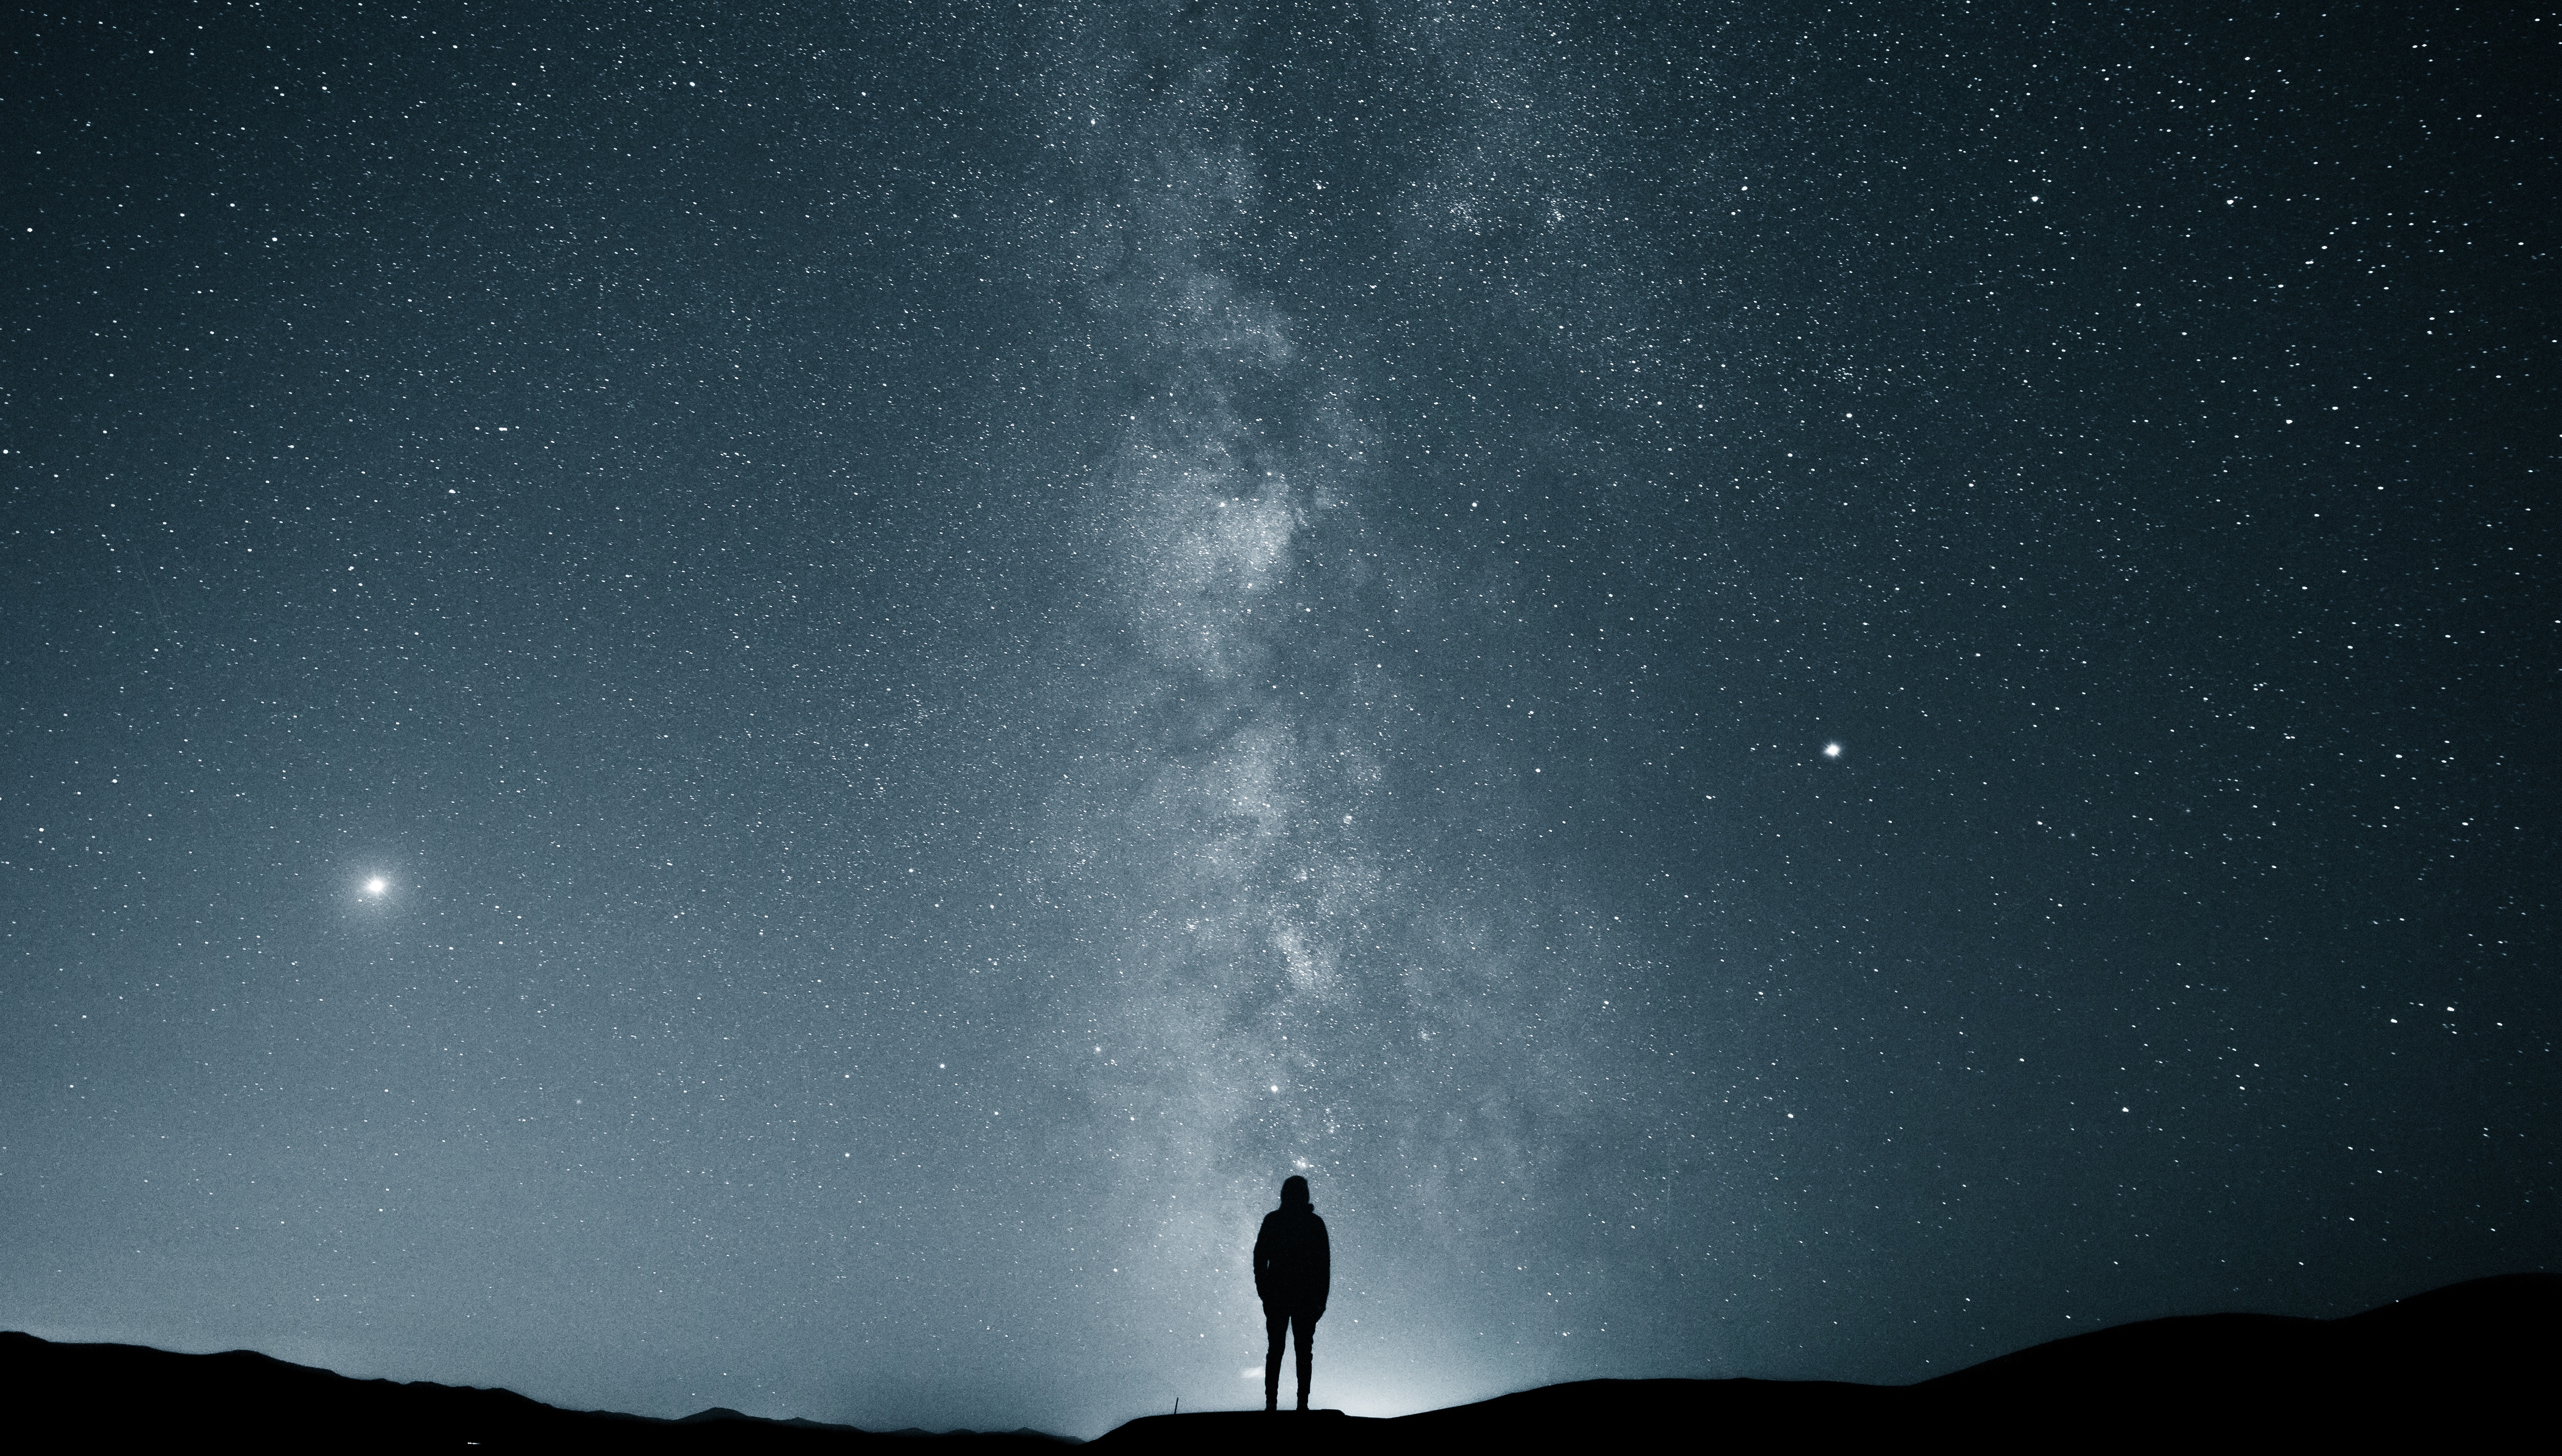 Starman waiting in the sky. Метеоритный дождь 2022. Звездное небо. Ночное небо со звездами. Звезда с неба.